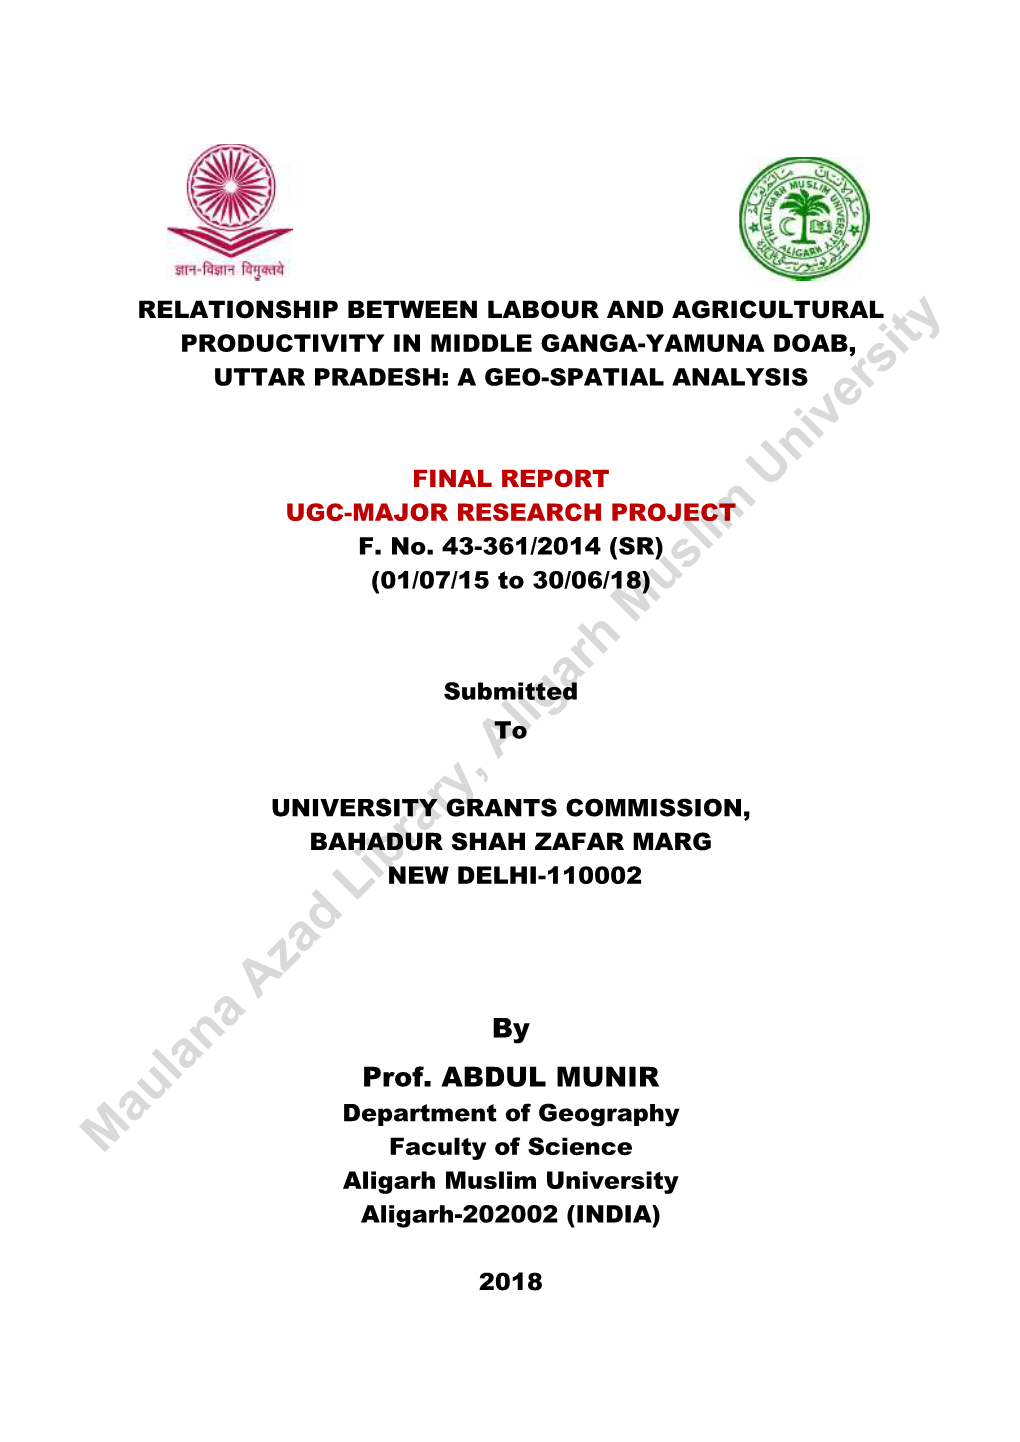 Maulana Azad Library, Aligarh Muslim University Acknowledgements